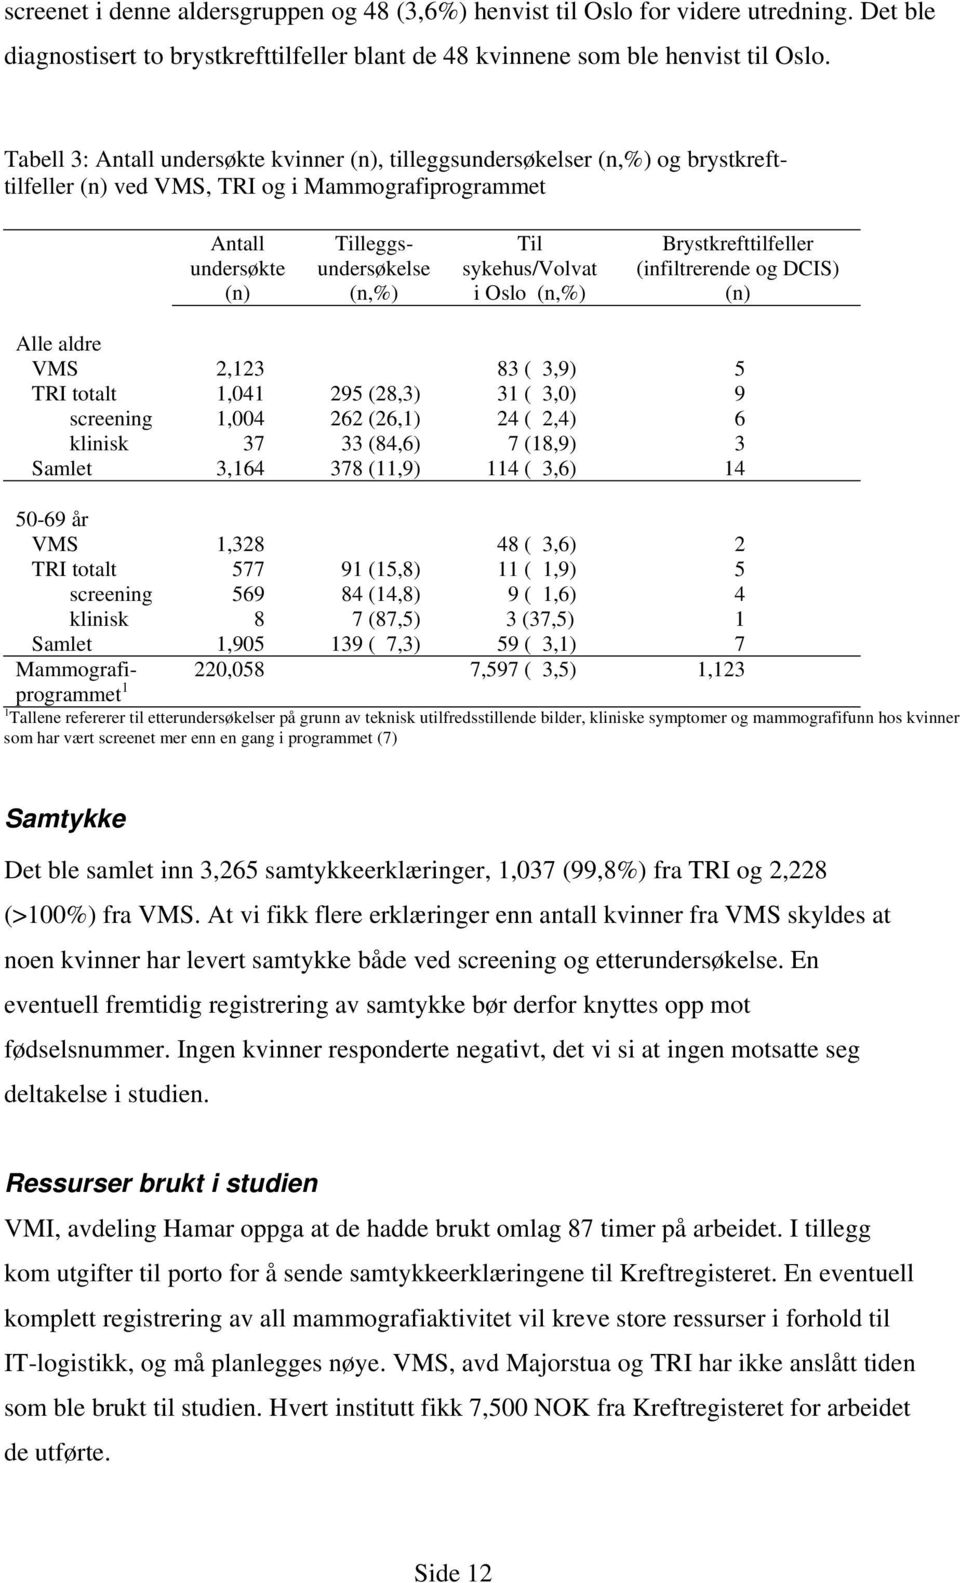 sykehus/volvat i Oslo (n,%) Brystkrefttilfeller (infiltrerende og DCIS) (n) Alle aldre VMS 2,123 83 ( 3,9) 5 TRI totalt screening klinisk 1,041 1,004 37 295 (28,3) 262 (26,1) 33 (84,6) 31 ( 3,0) 24 (